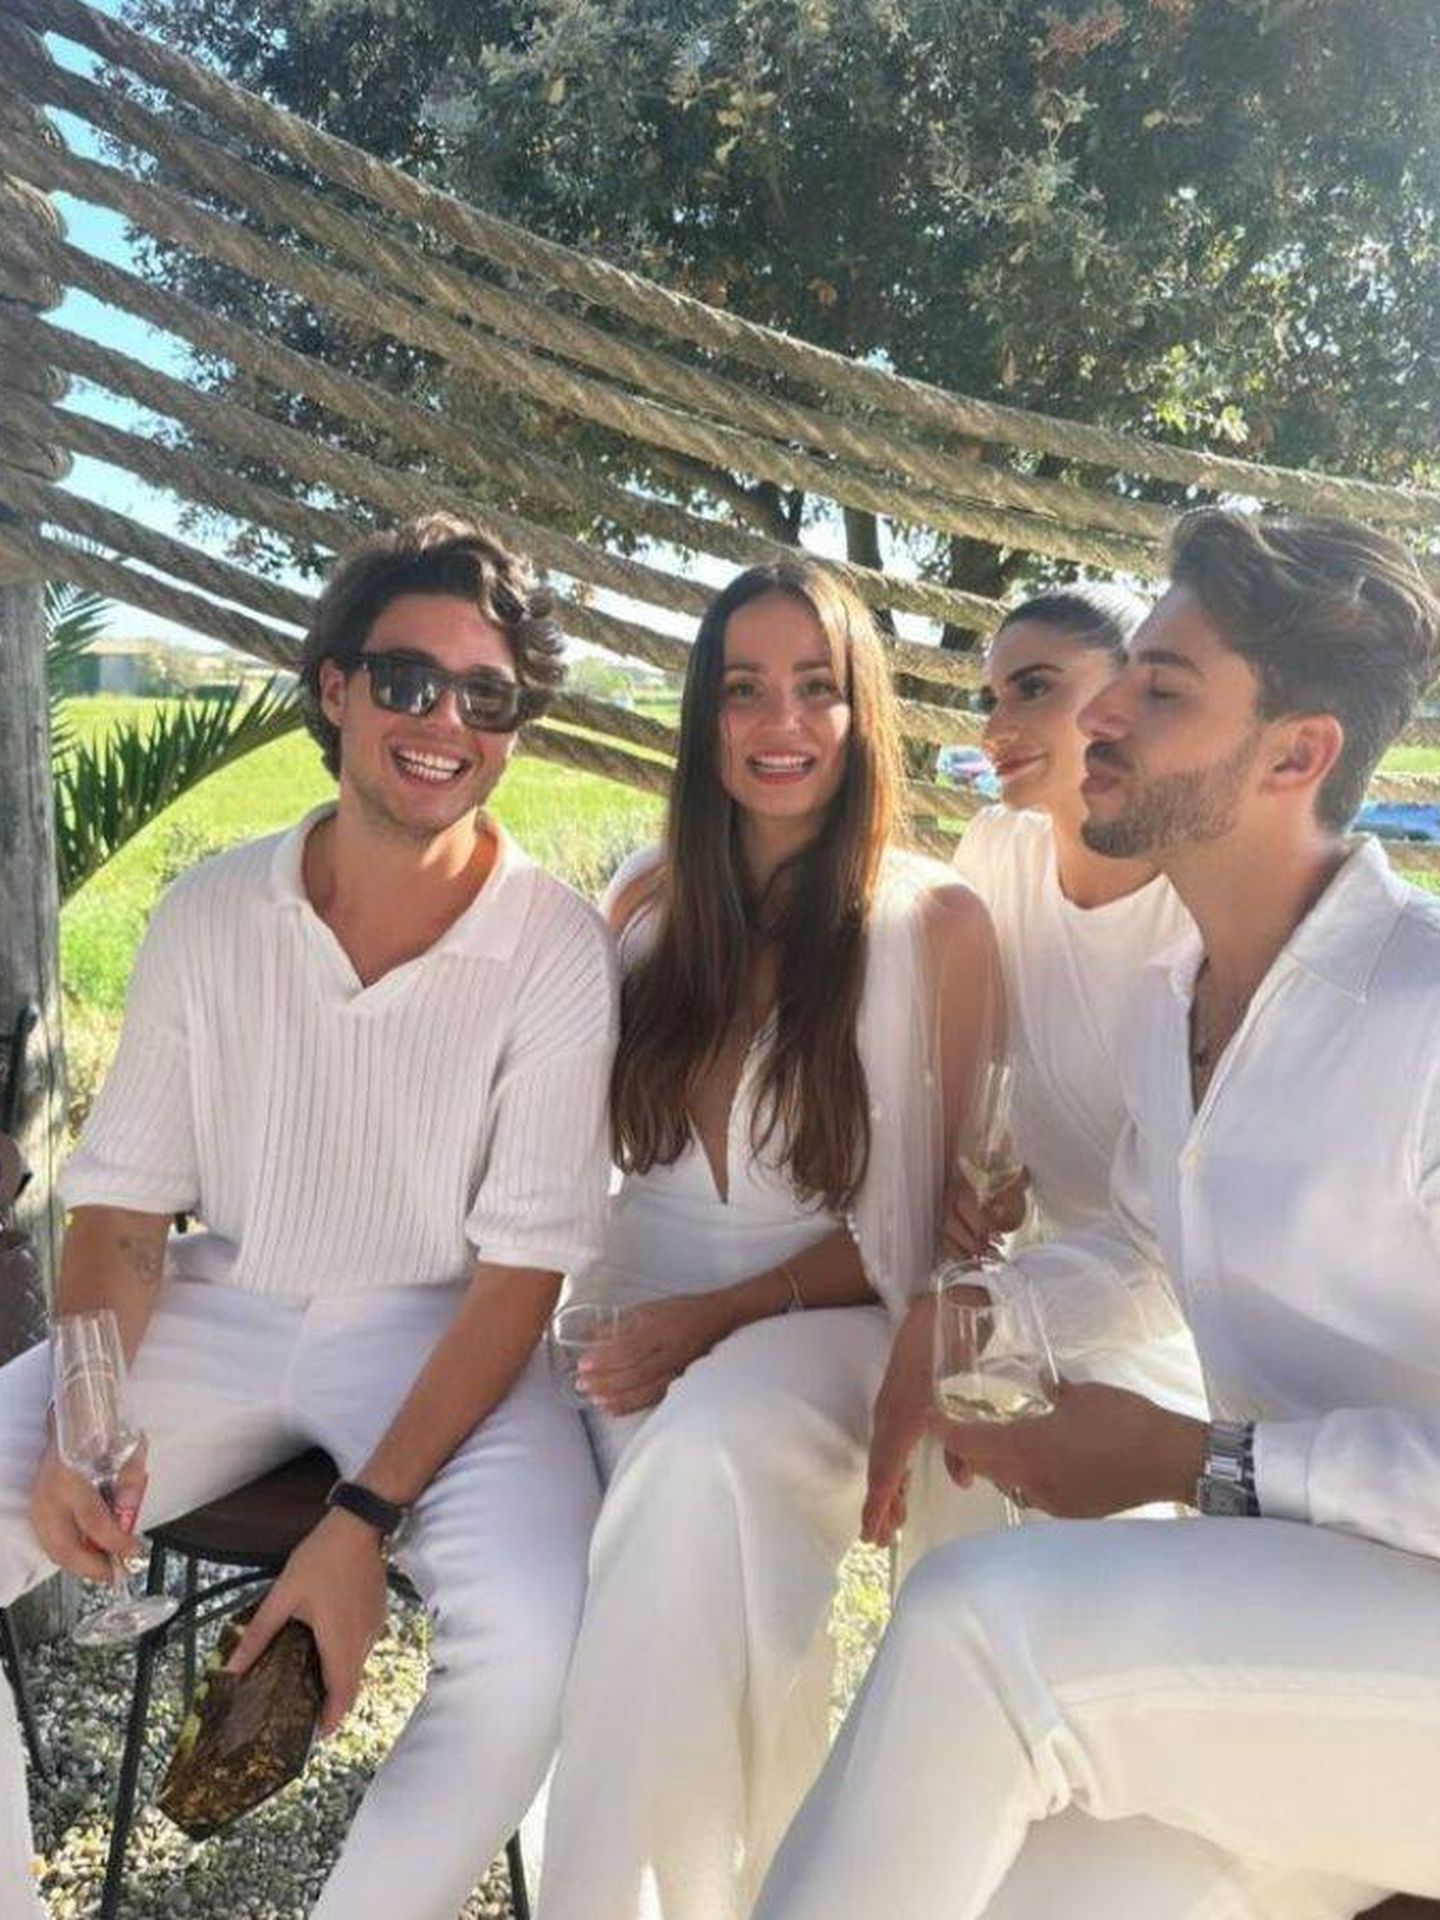 Carolina Monje posa con amigos en su fiesta preboda. (Instagram @marcvicaro)